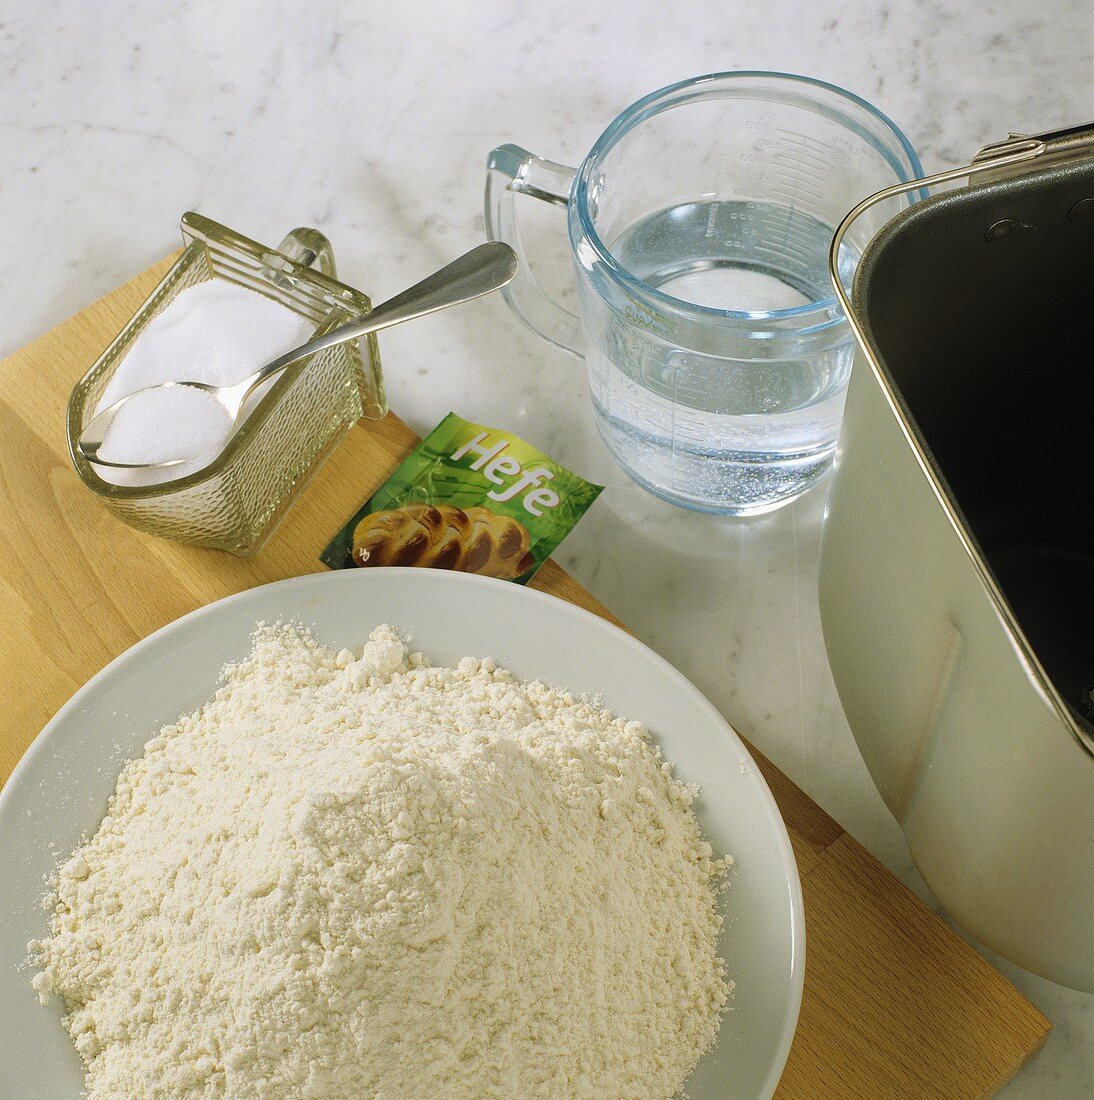 Ingredients for white bread dough (flour, yeast, salt & water)